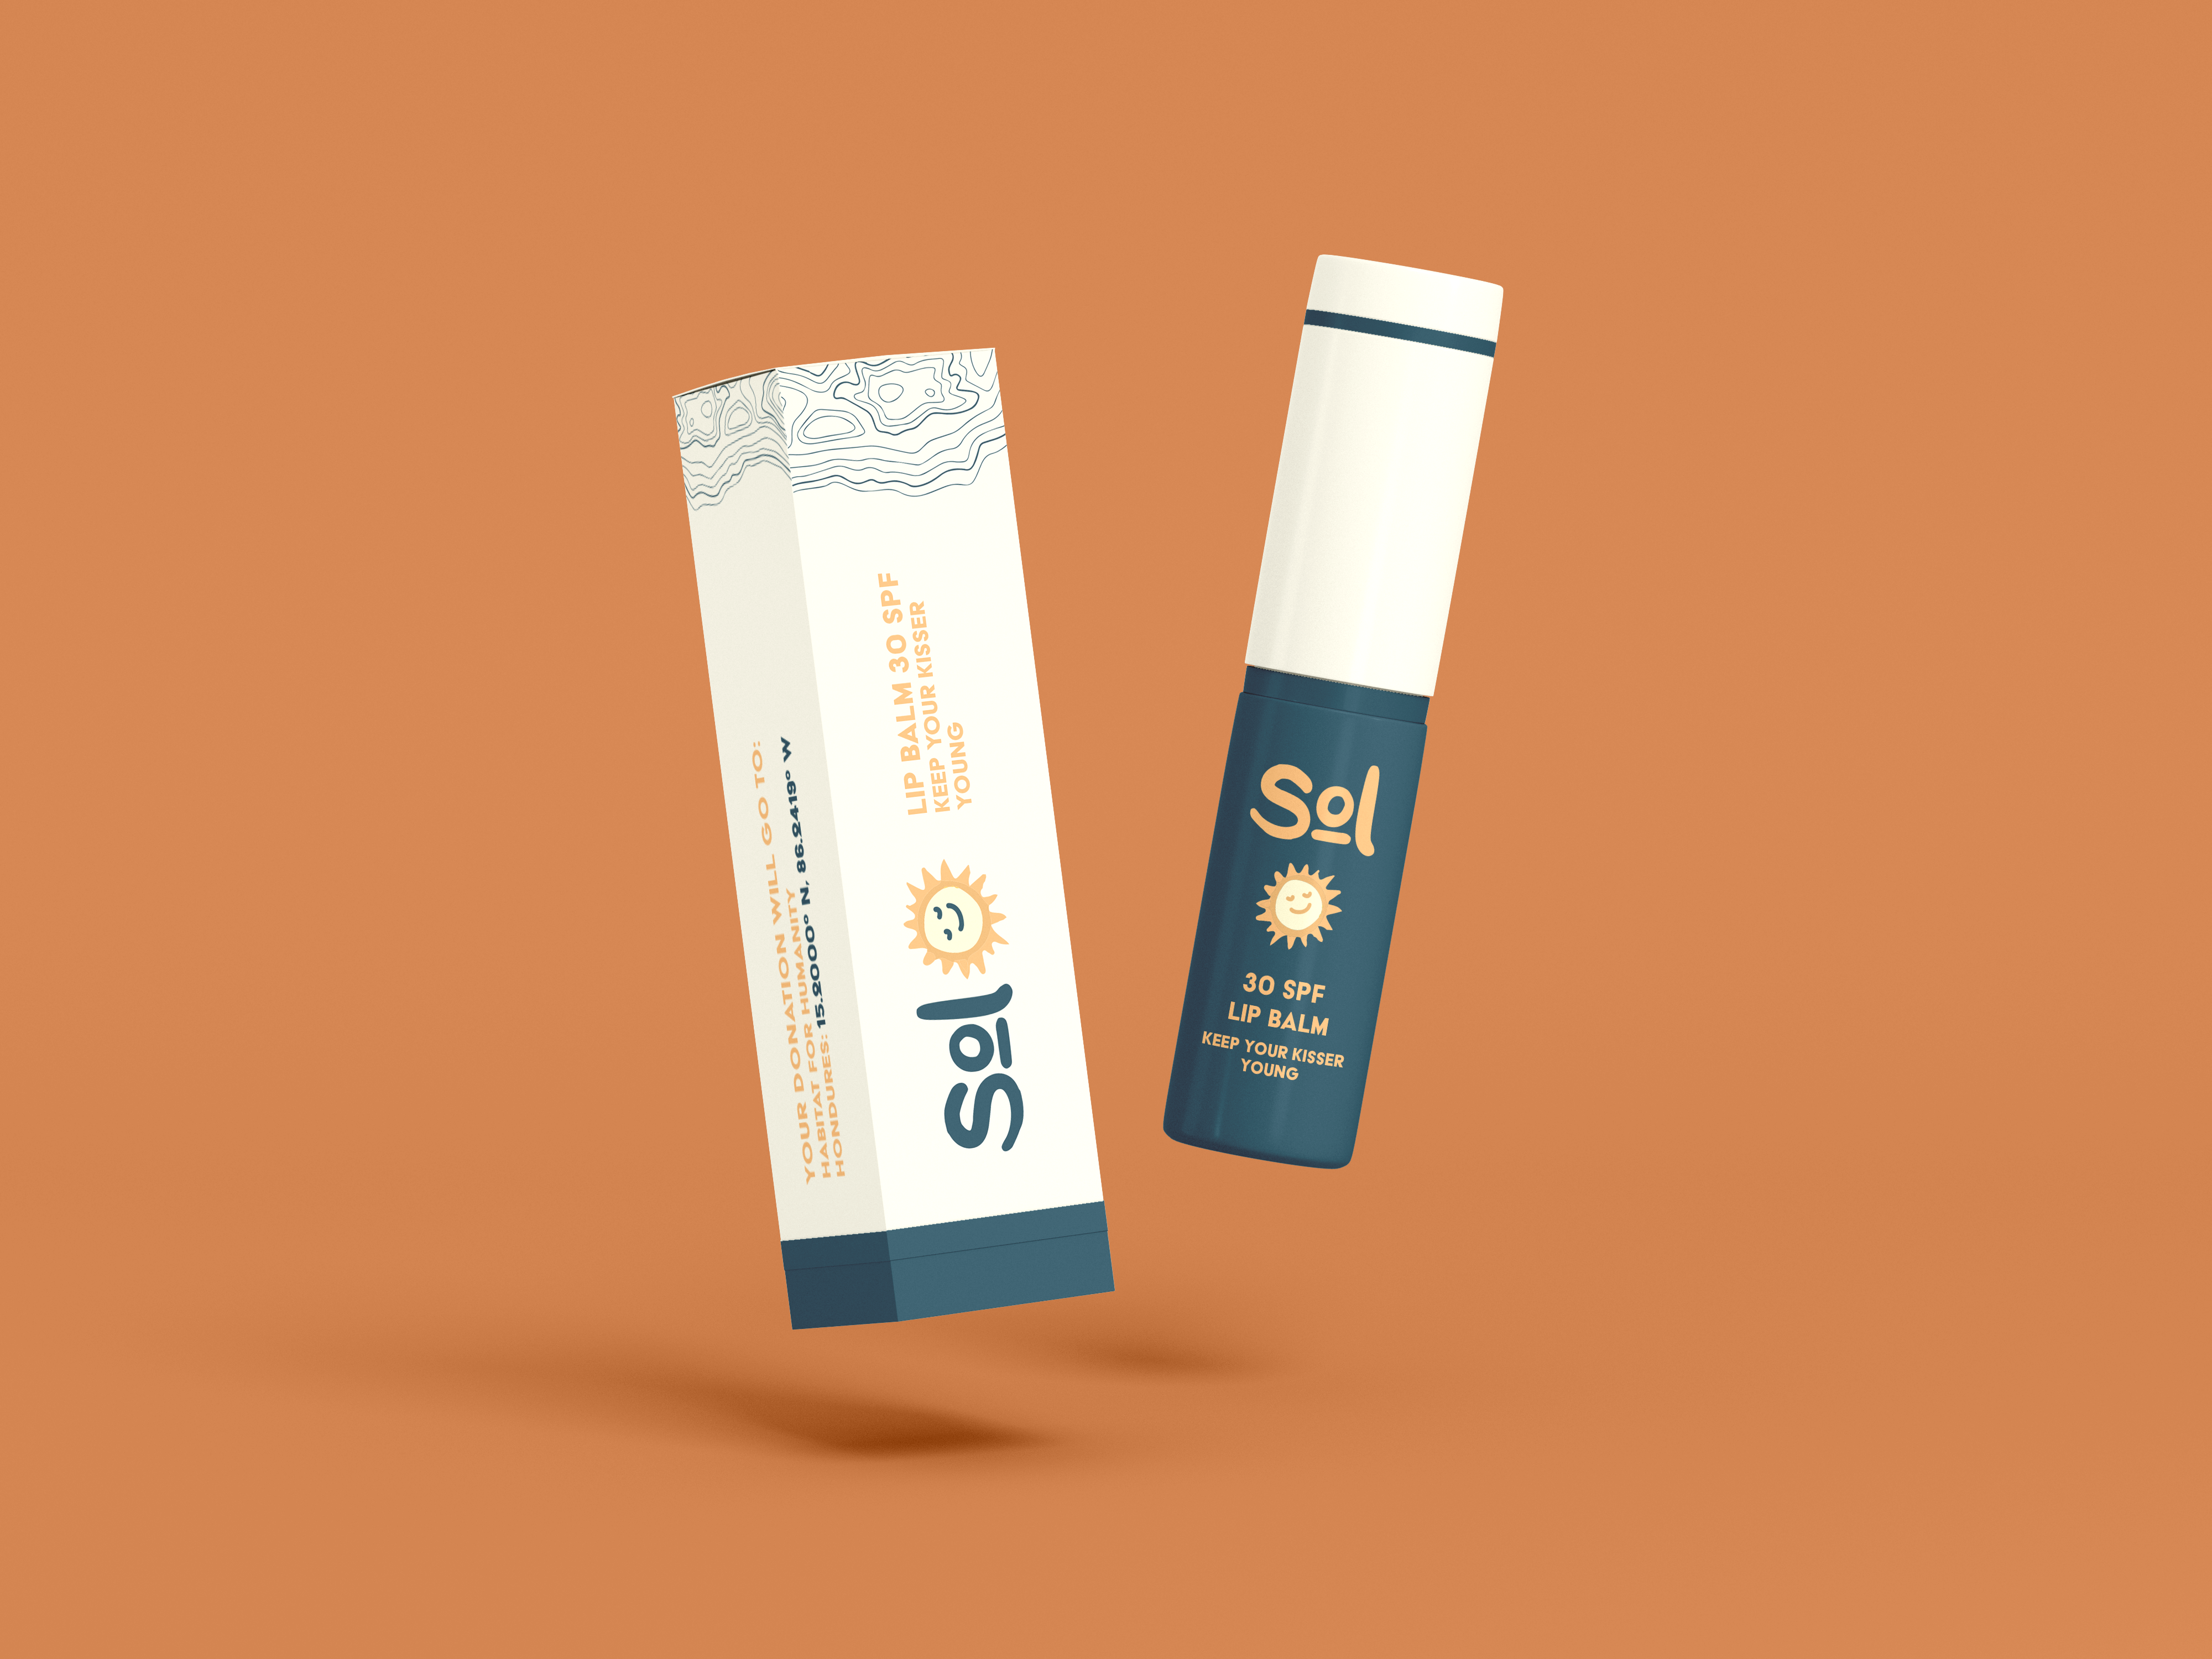 Sol Sunscreen Concept